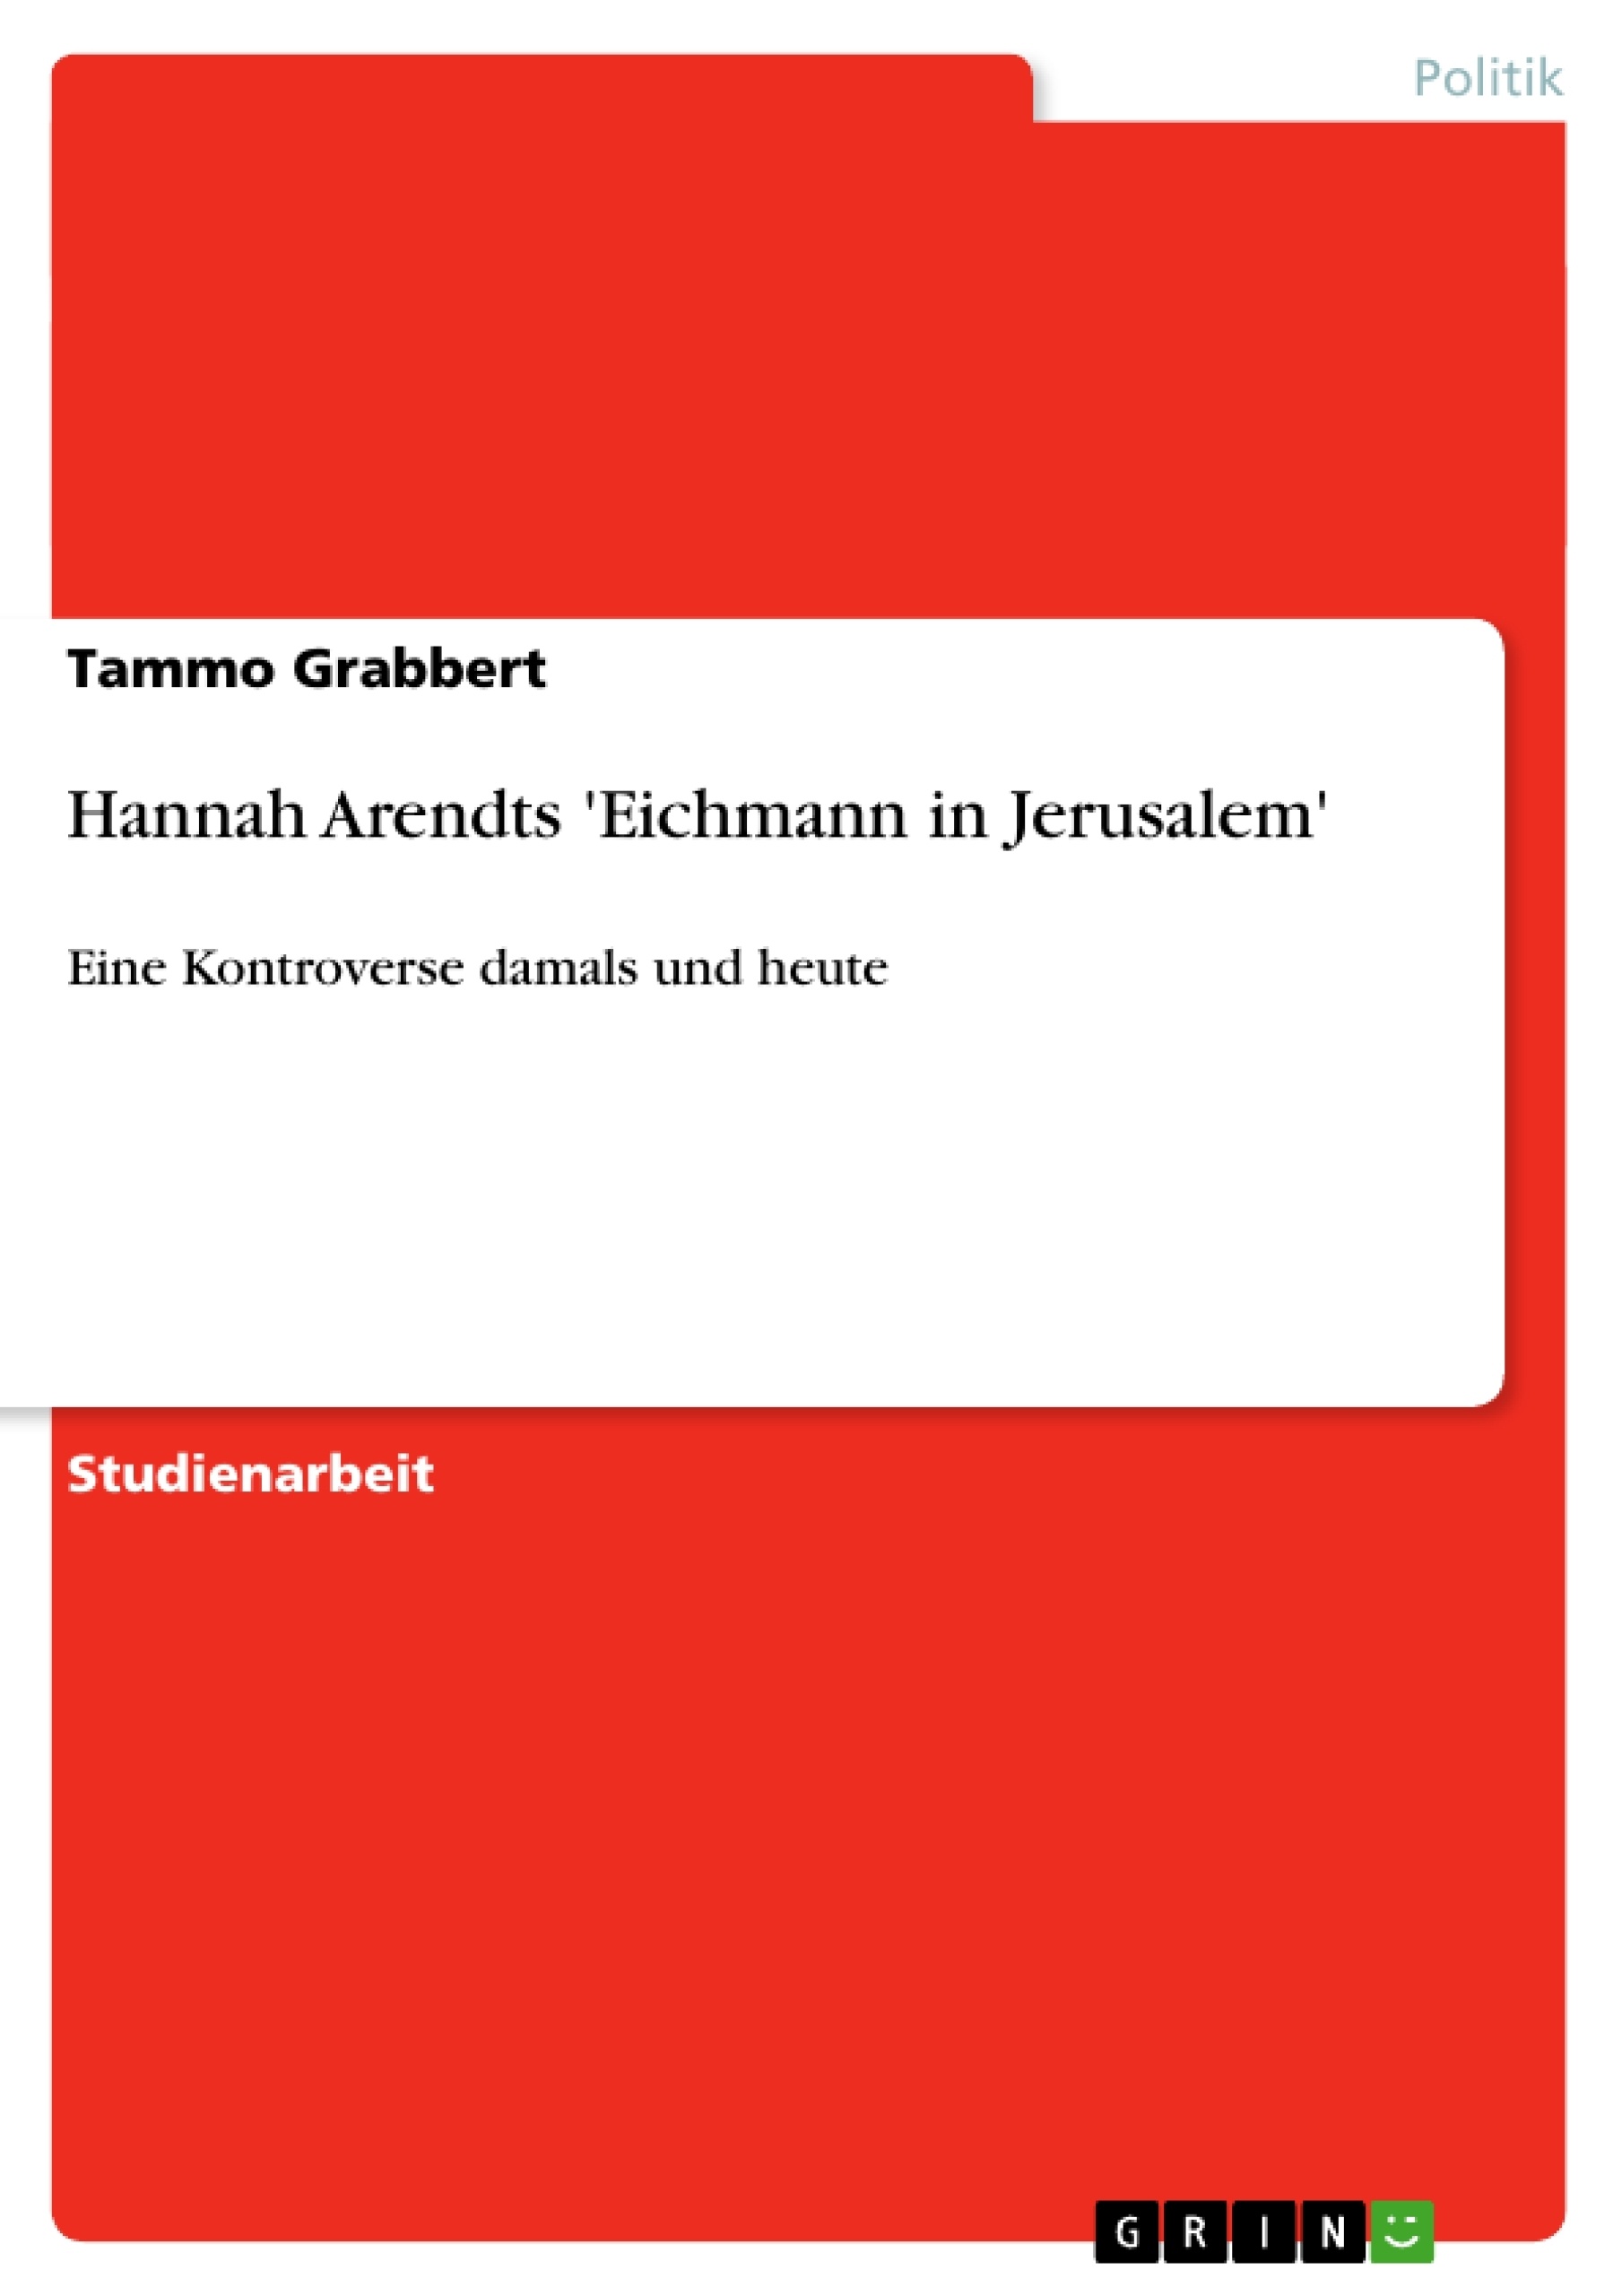 Título: Hannah Arendts 'Eichmann in Jerusalem'